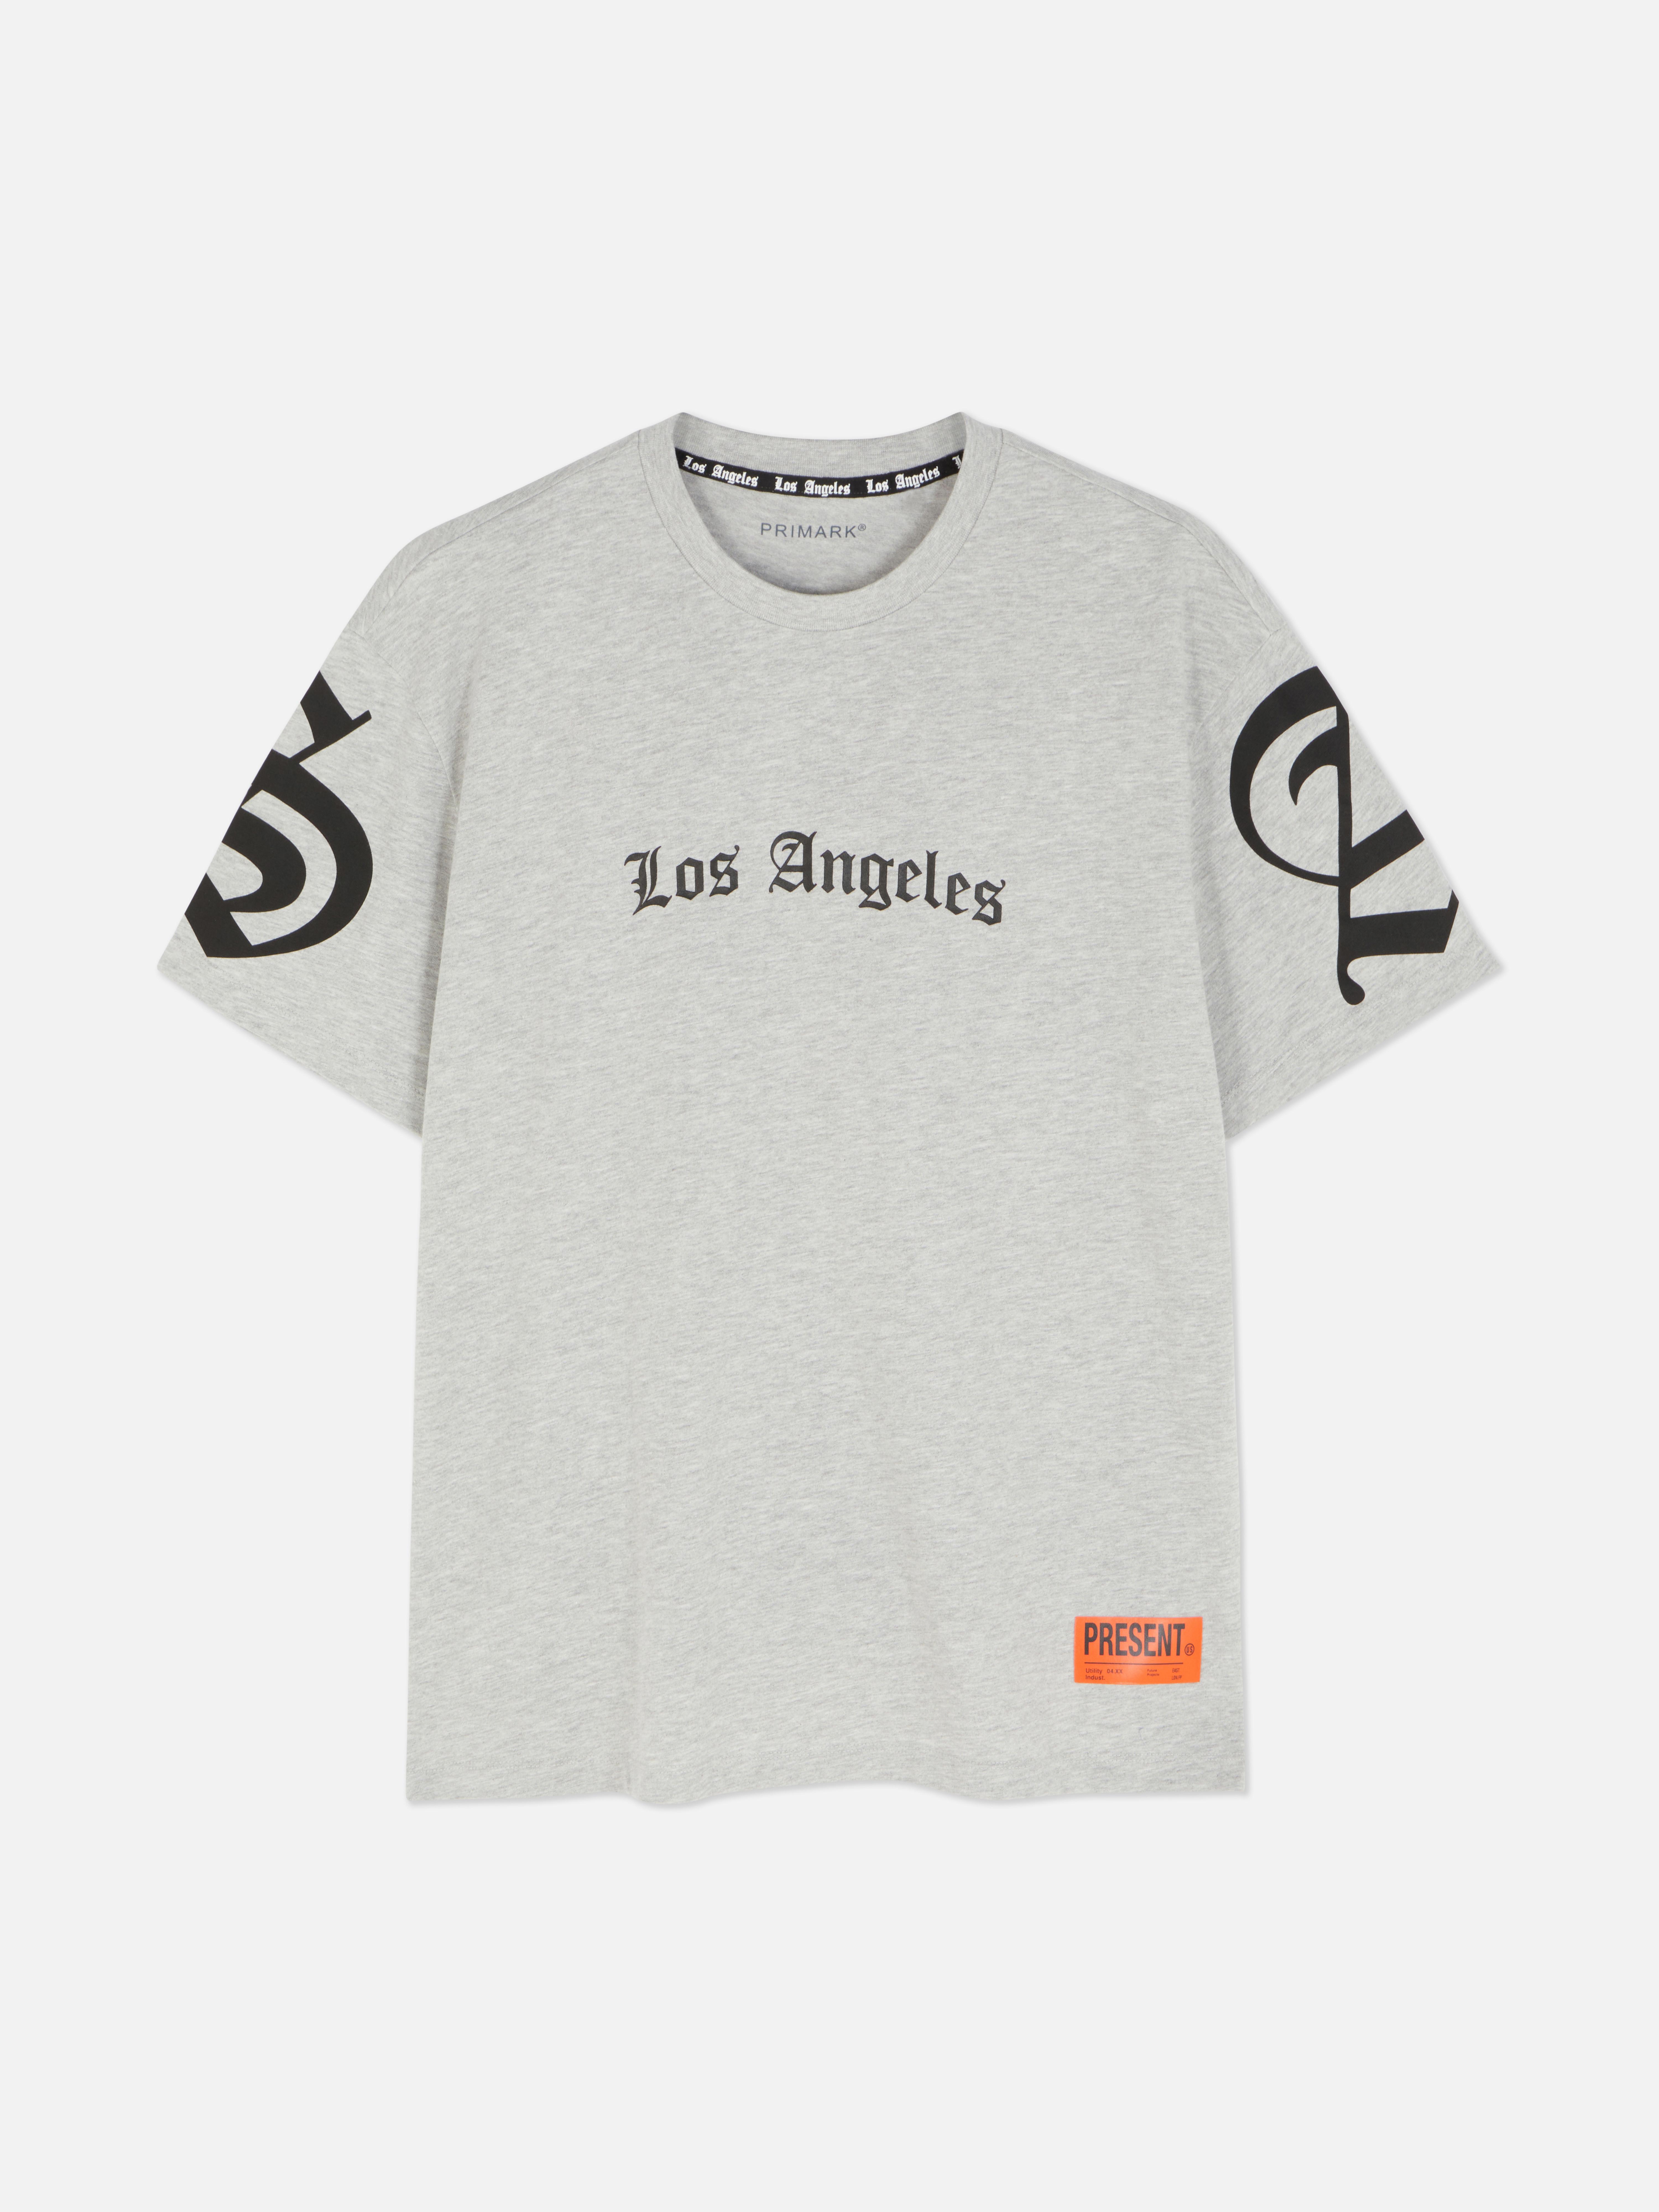 Primark Original Los Angeles T Shirt Large